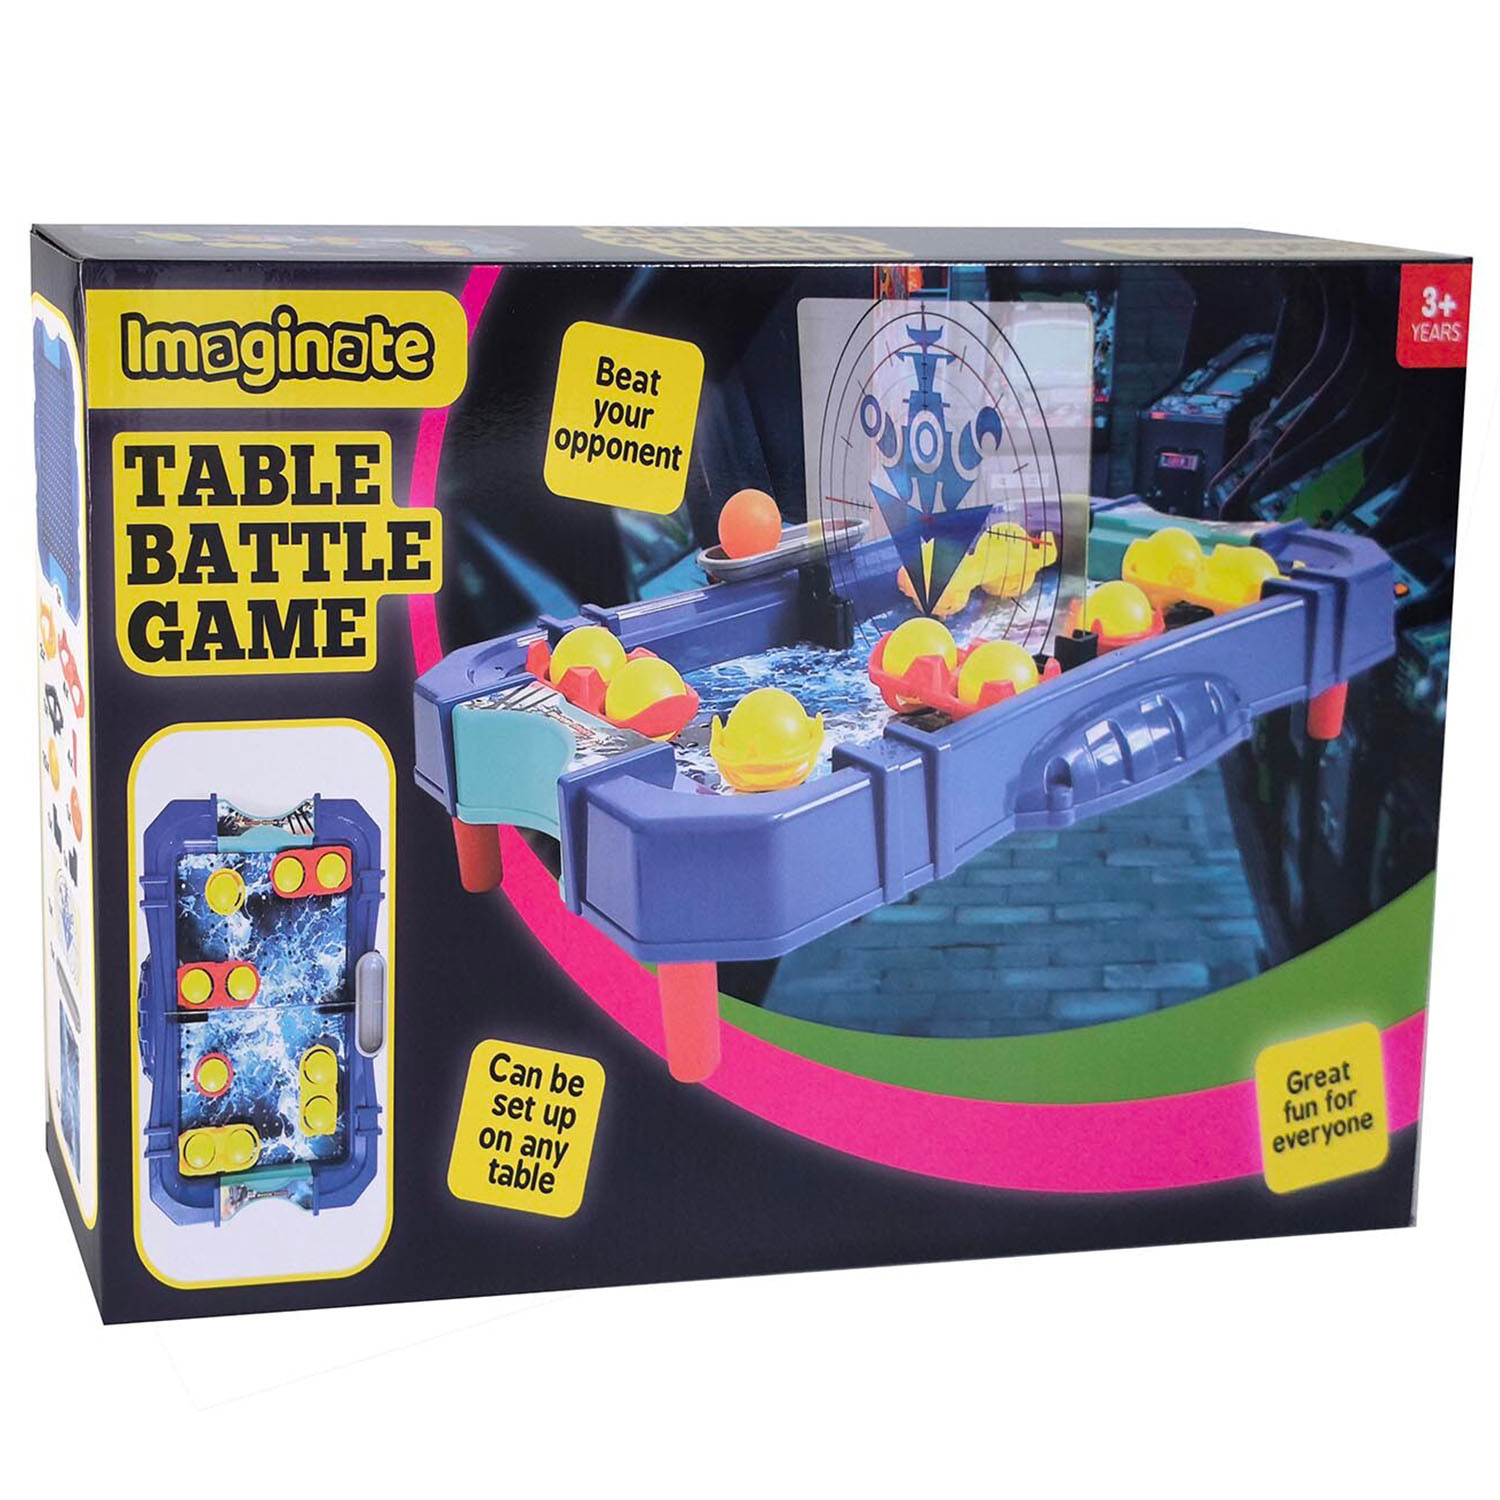 Imaginate Table Battle Game Image